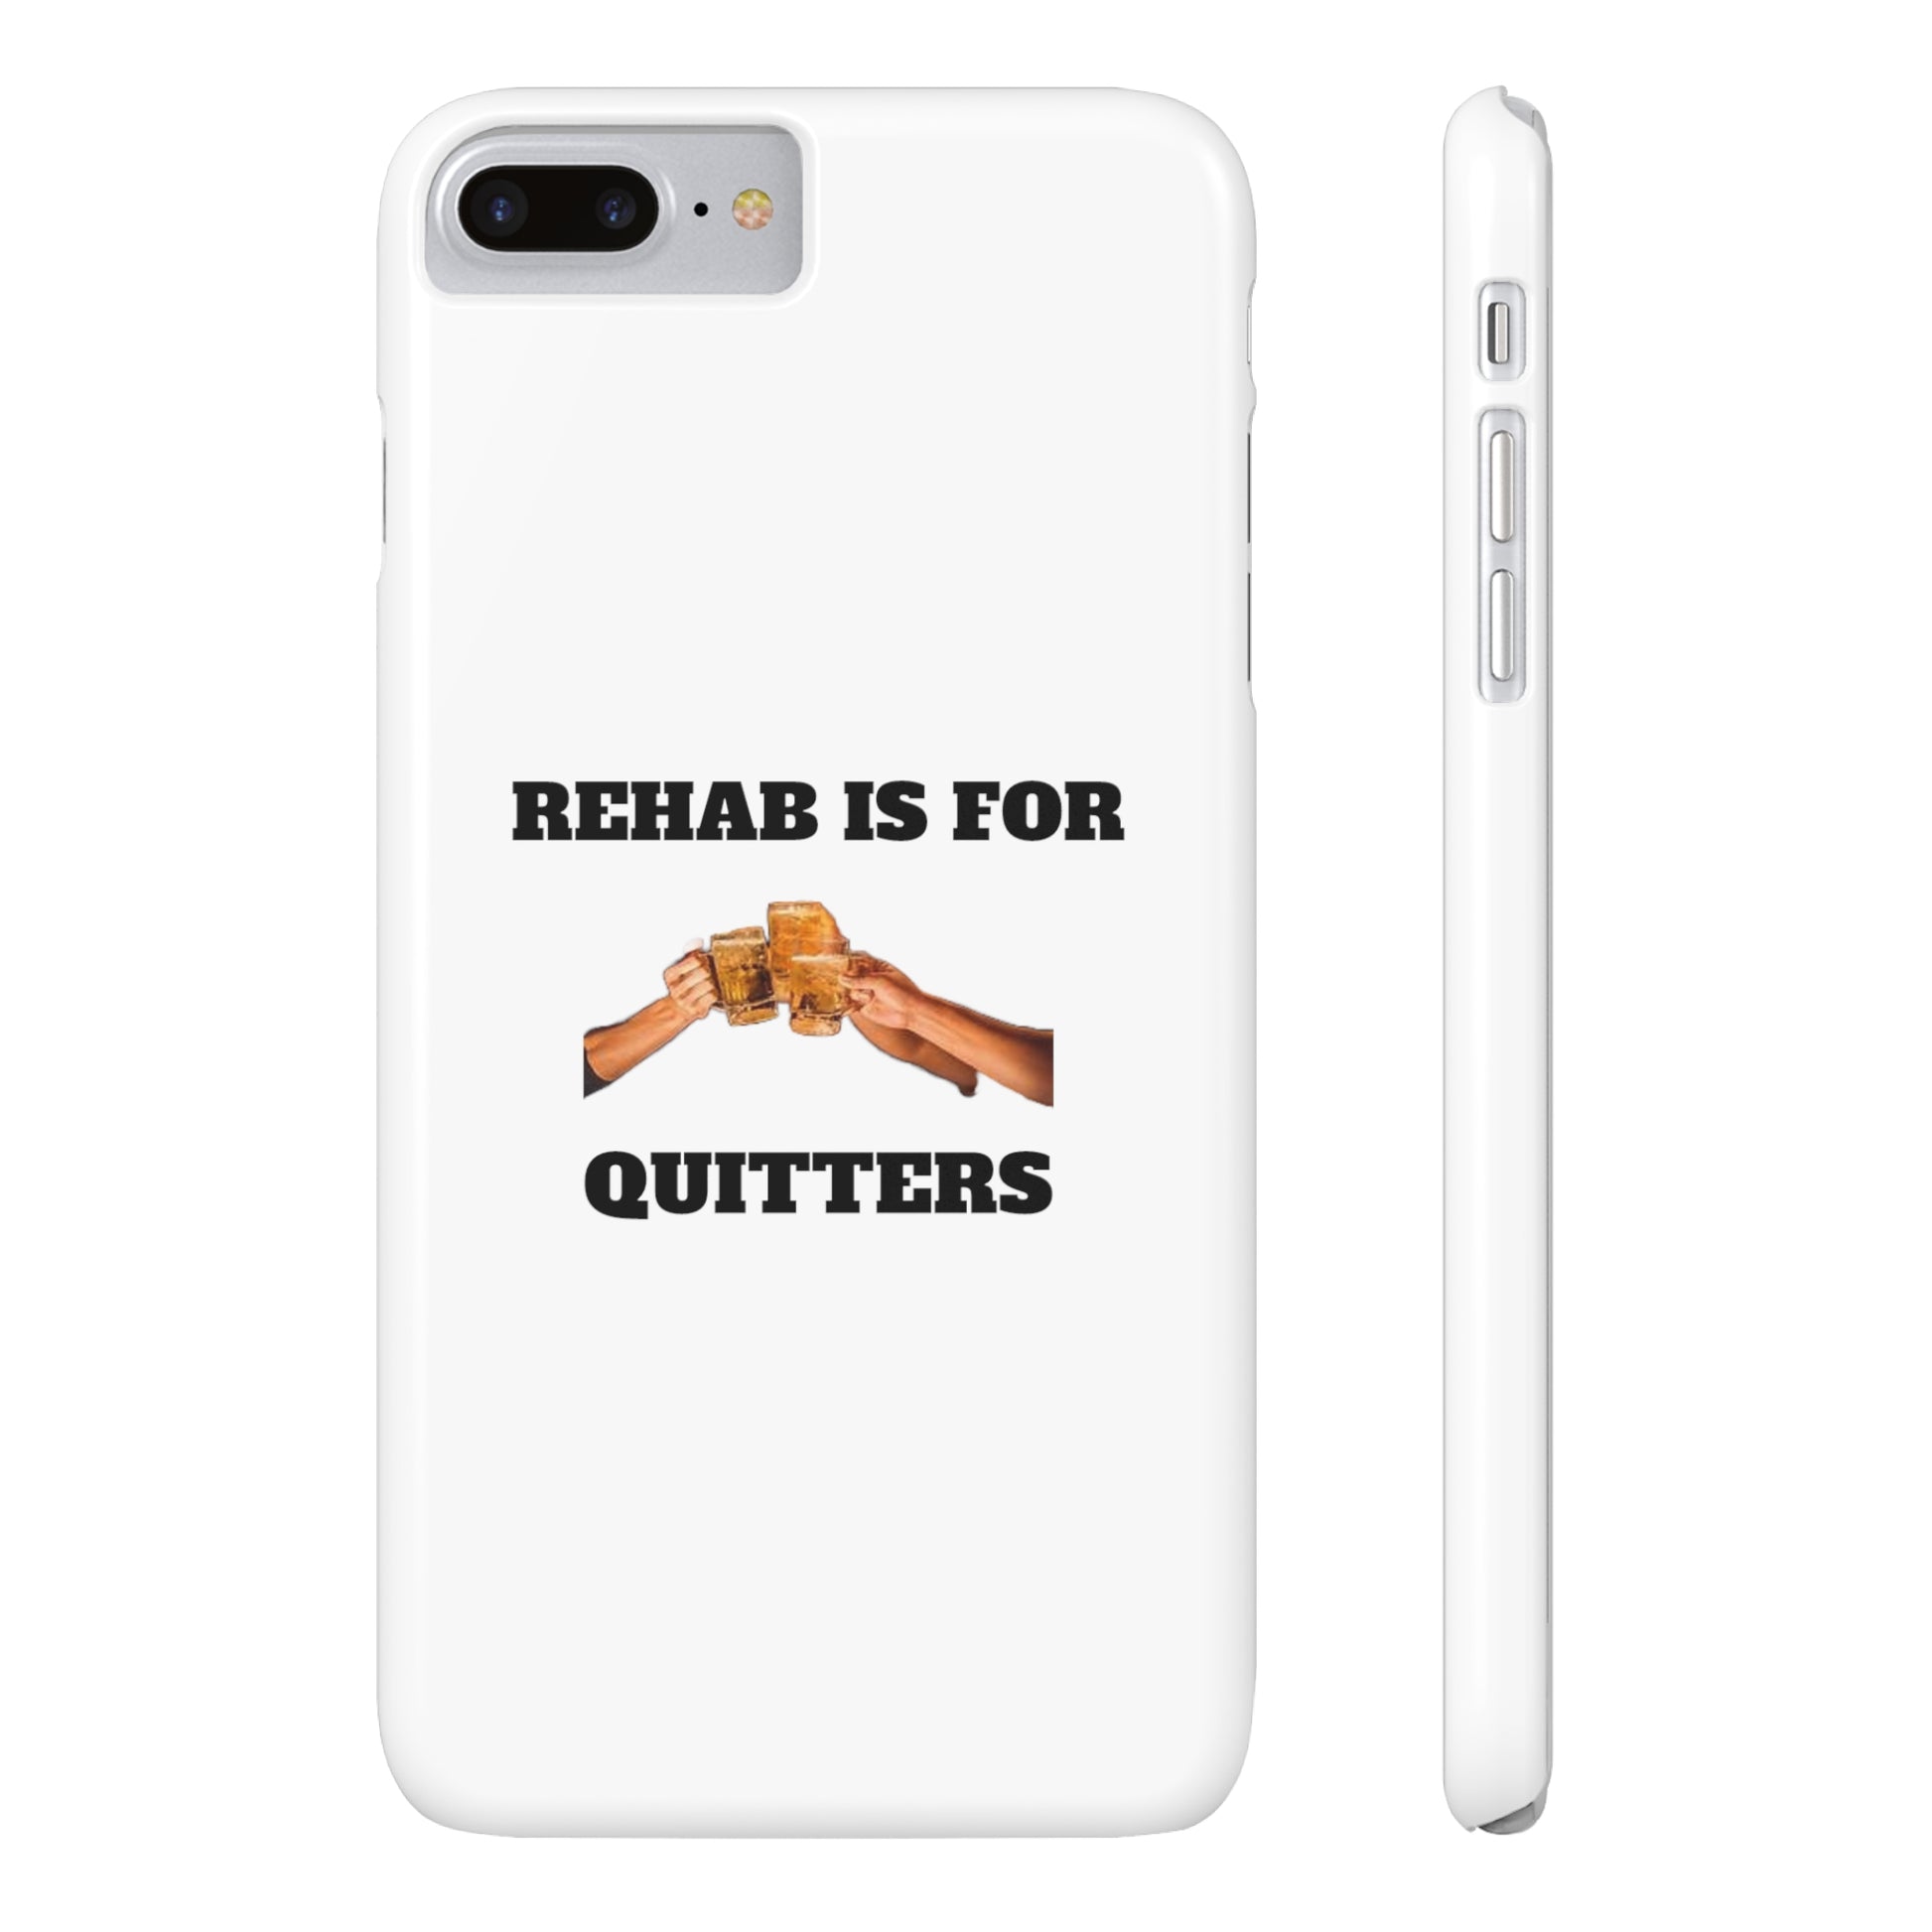 "Rehab Is For Quitters" Phone Cases iPhone 7 Plus, iPhone 8 Plus Slim